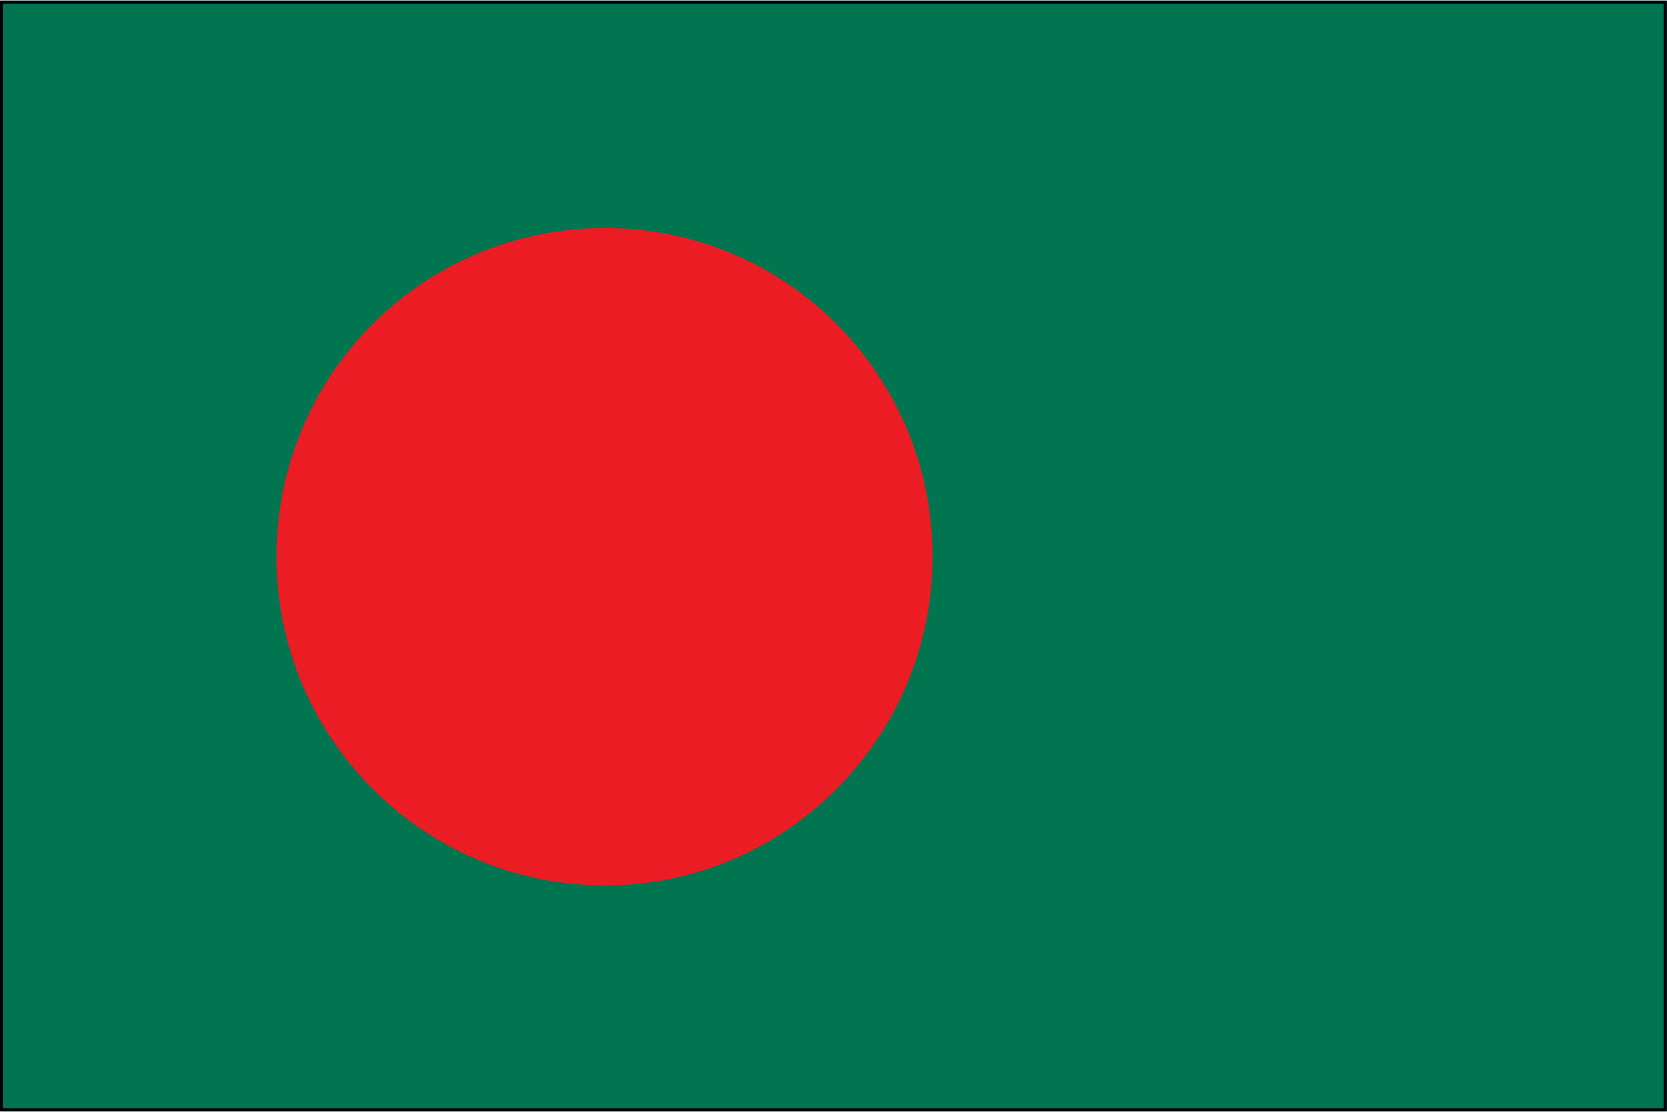 Bangladesh Miniature Flag 4